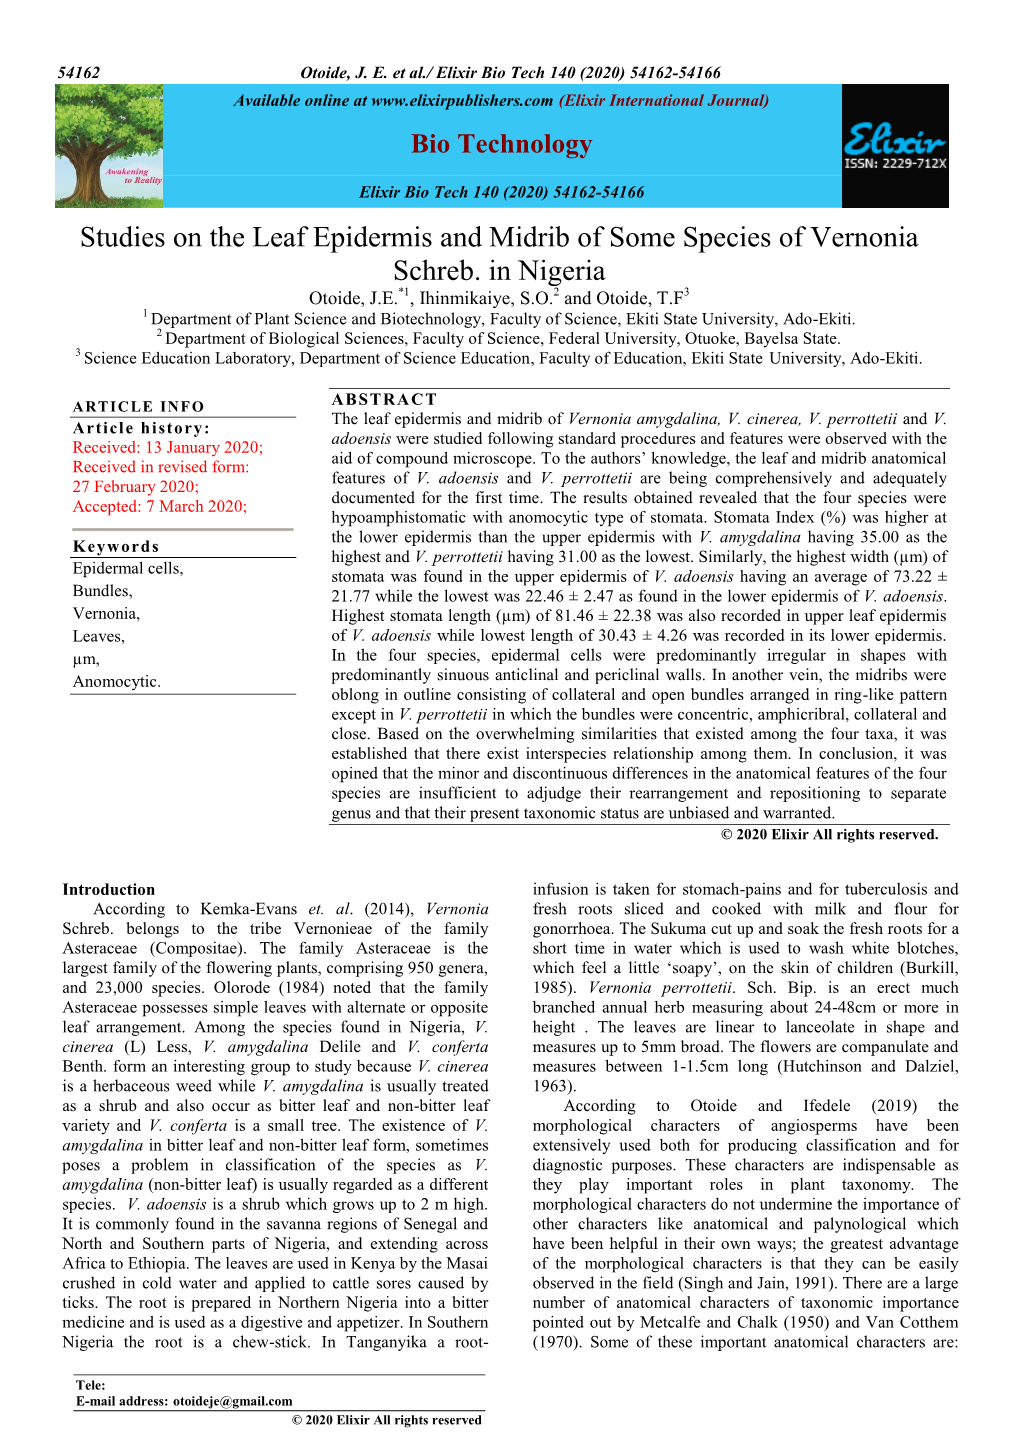 Studies on the Leaf Epidermis and Midrib of Some Species of Vernonia Schreb